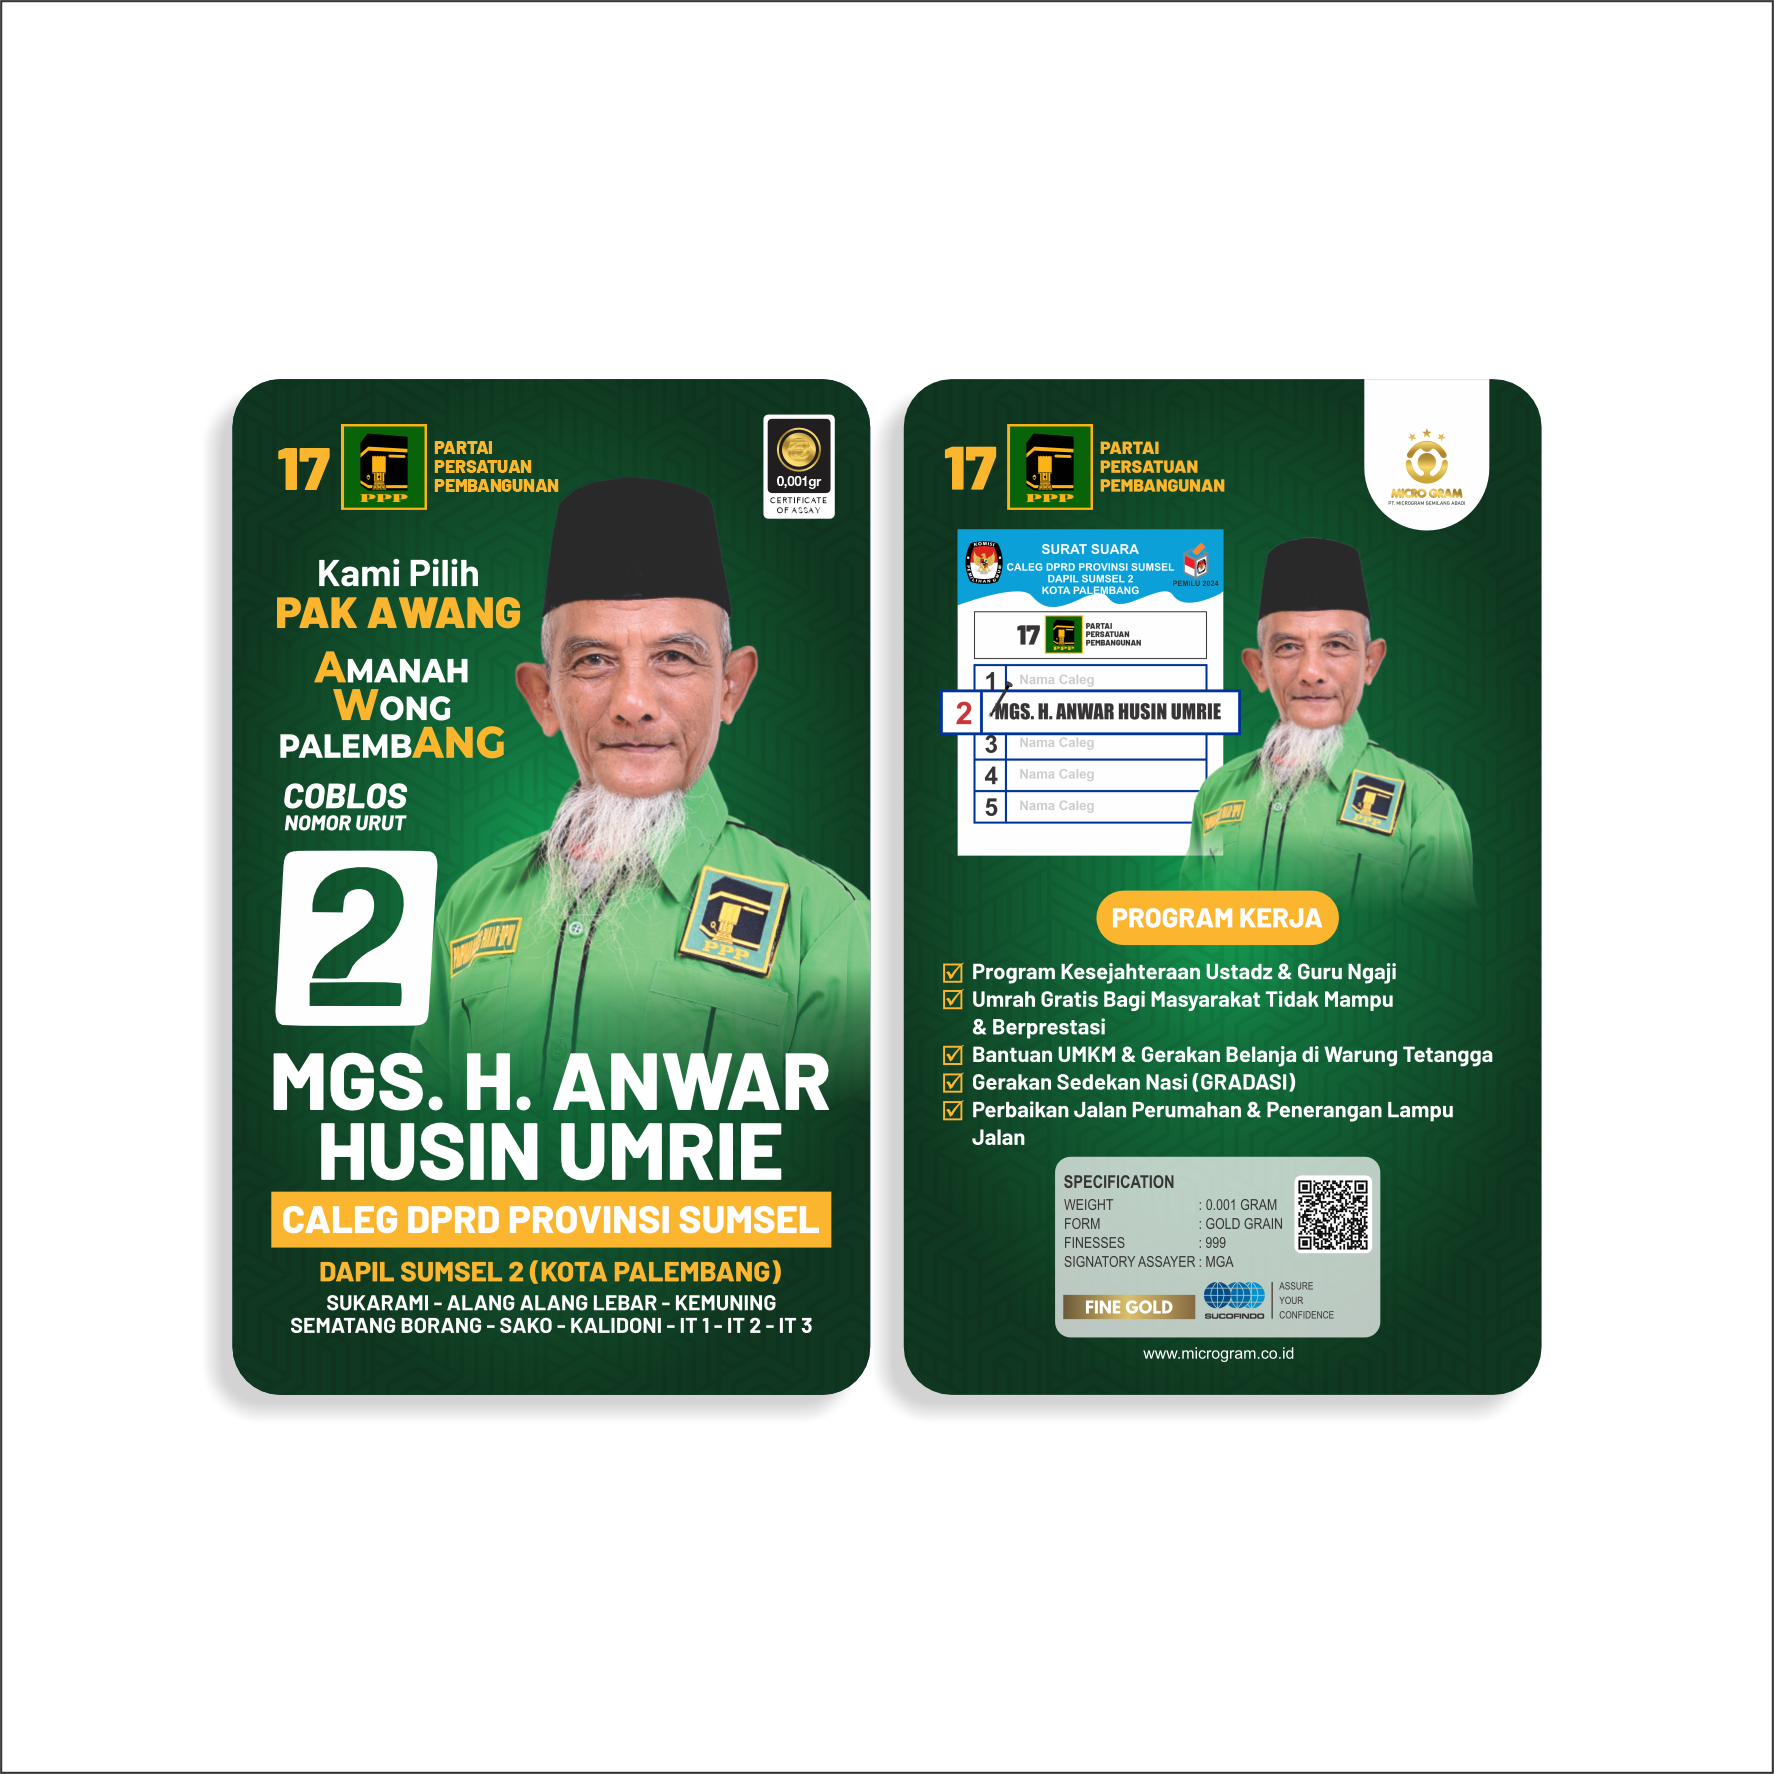 Mgs. H. Anwar Husin Umrie 0.001